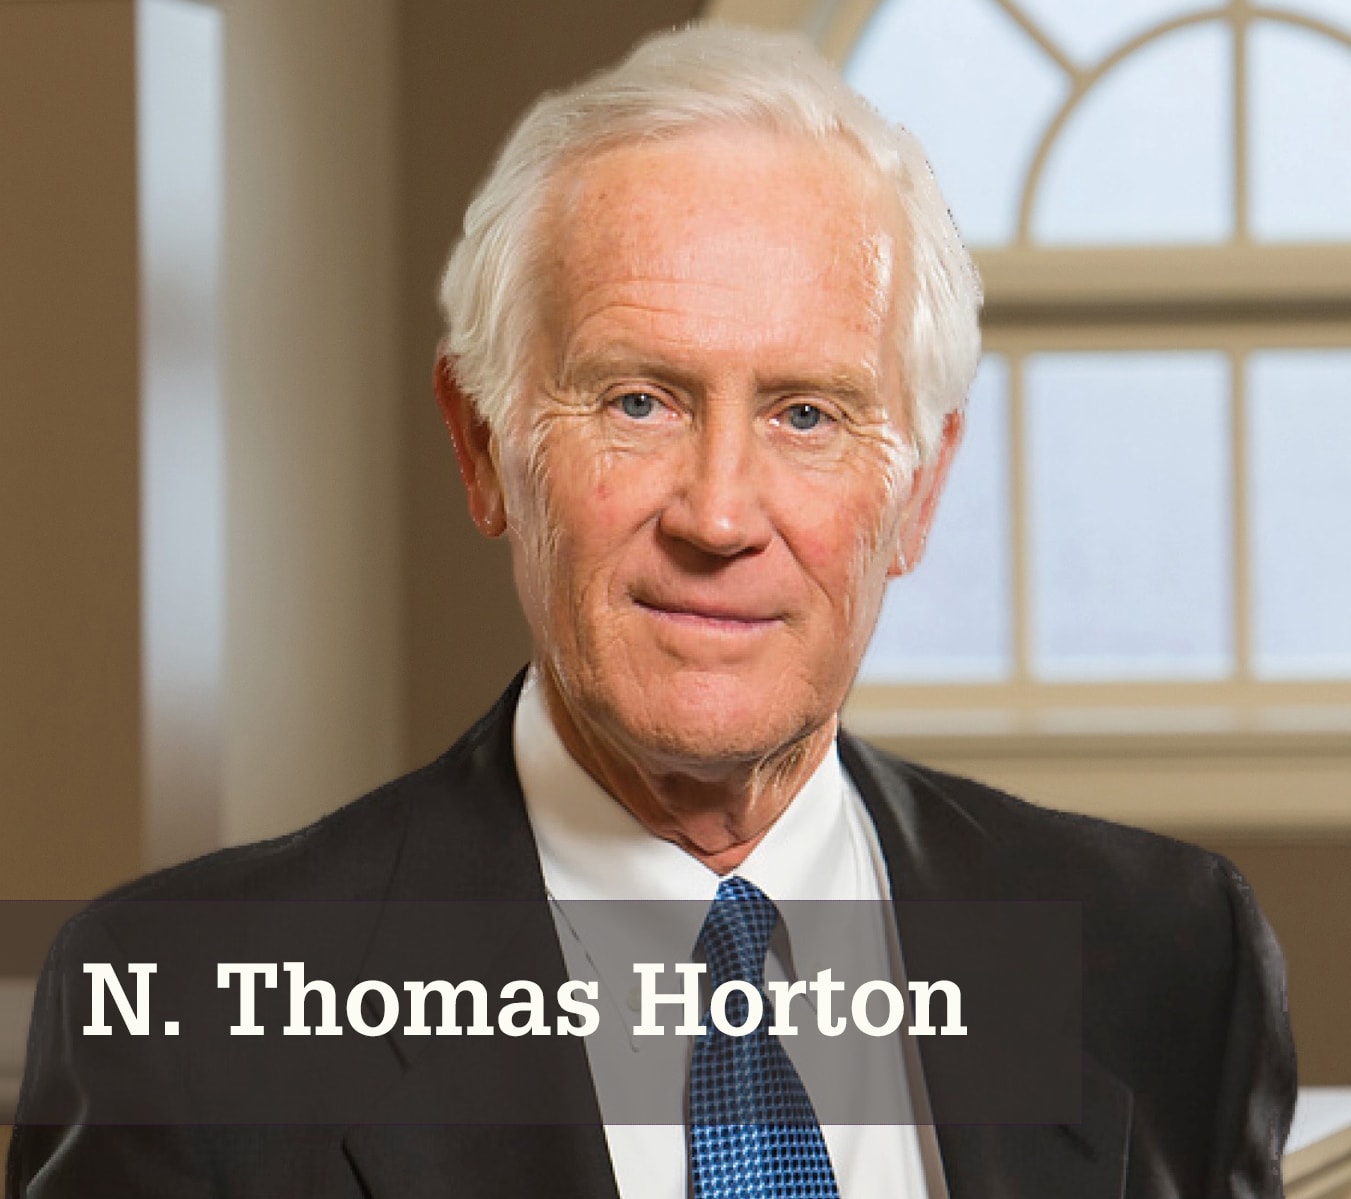 N. Thomas Horton